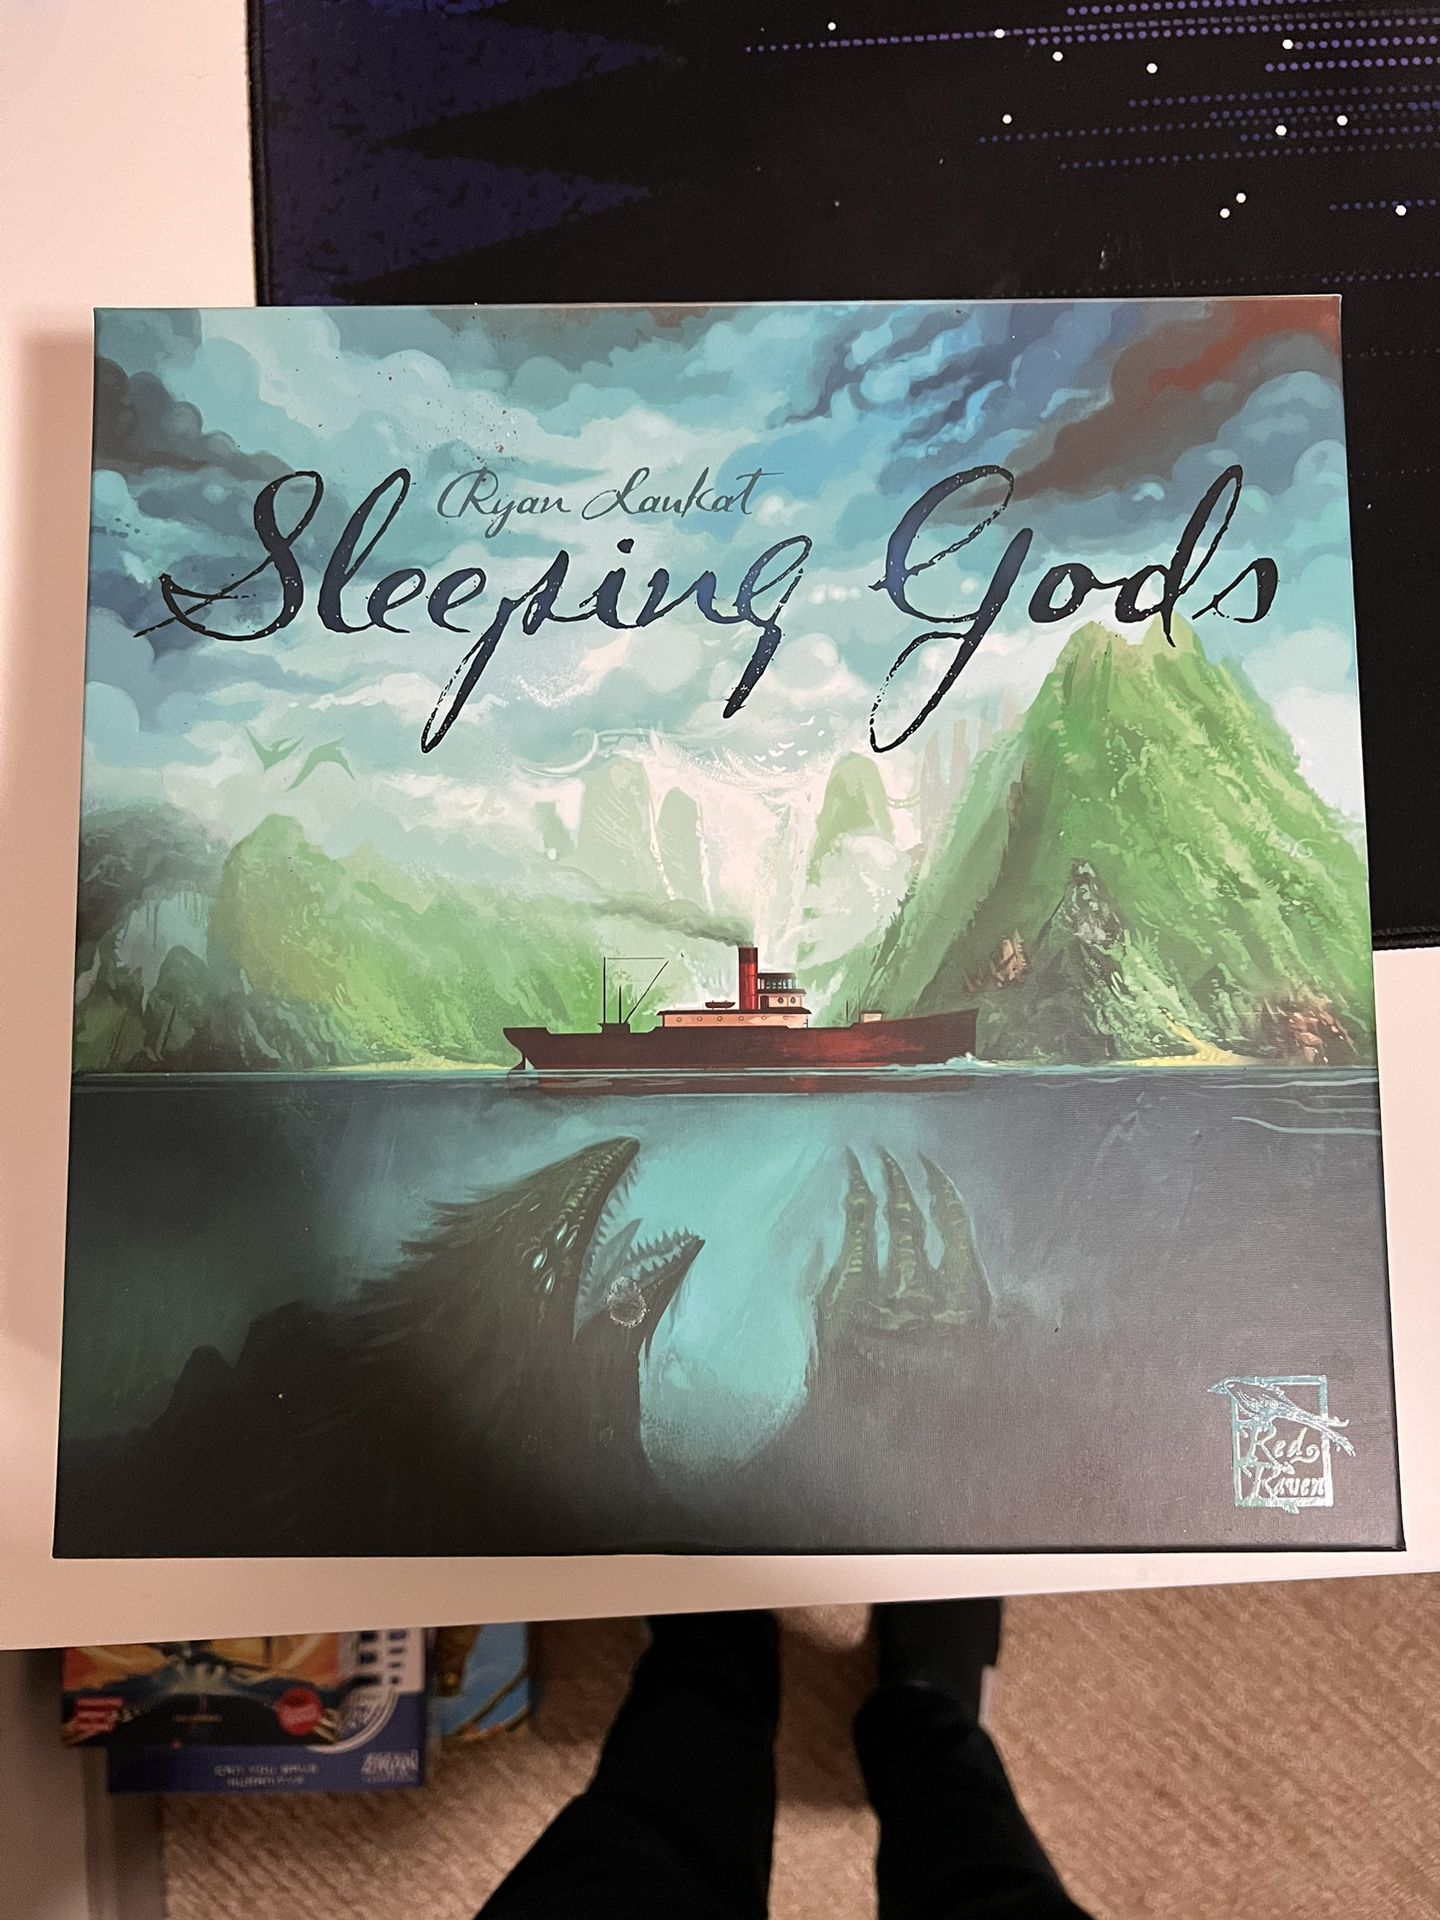 Sleeping Gods Board Game